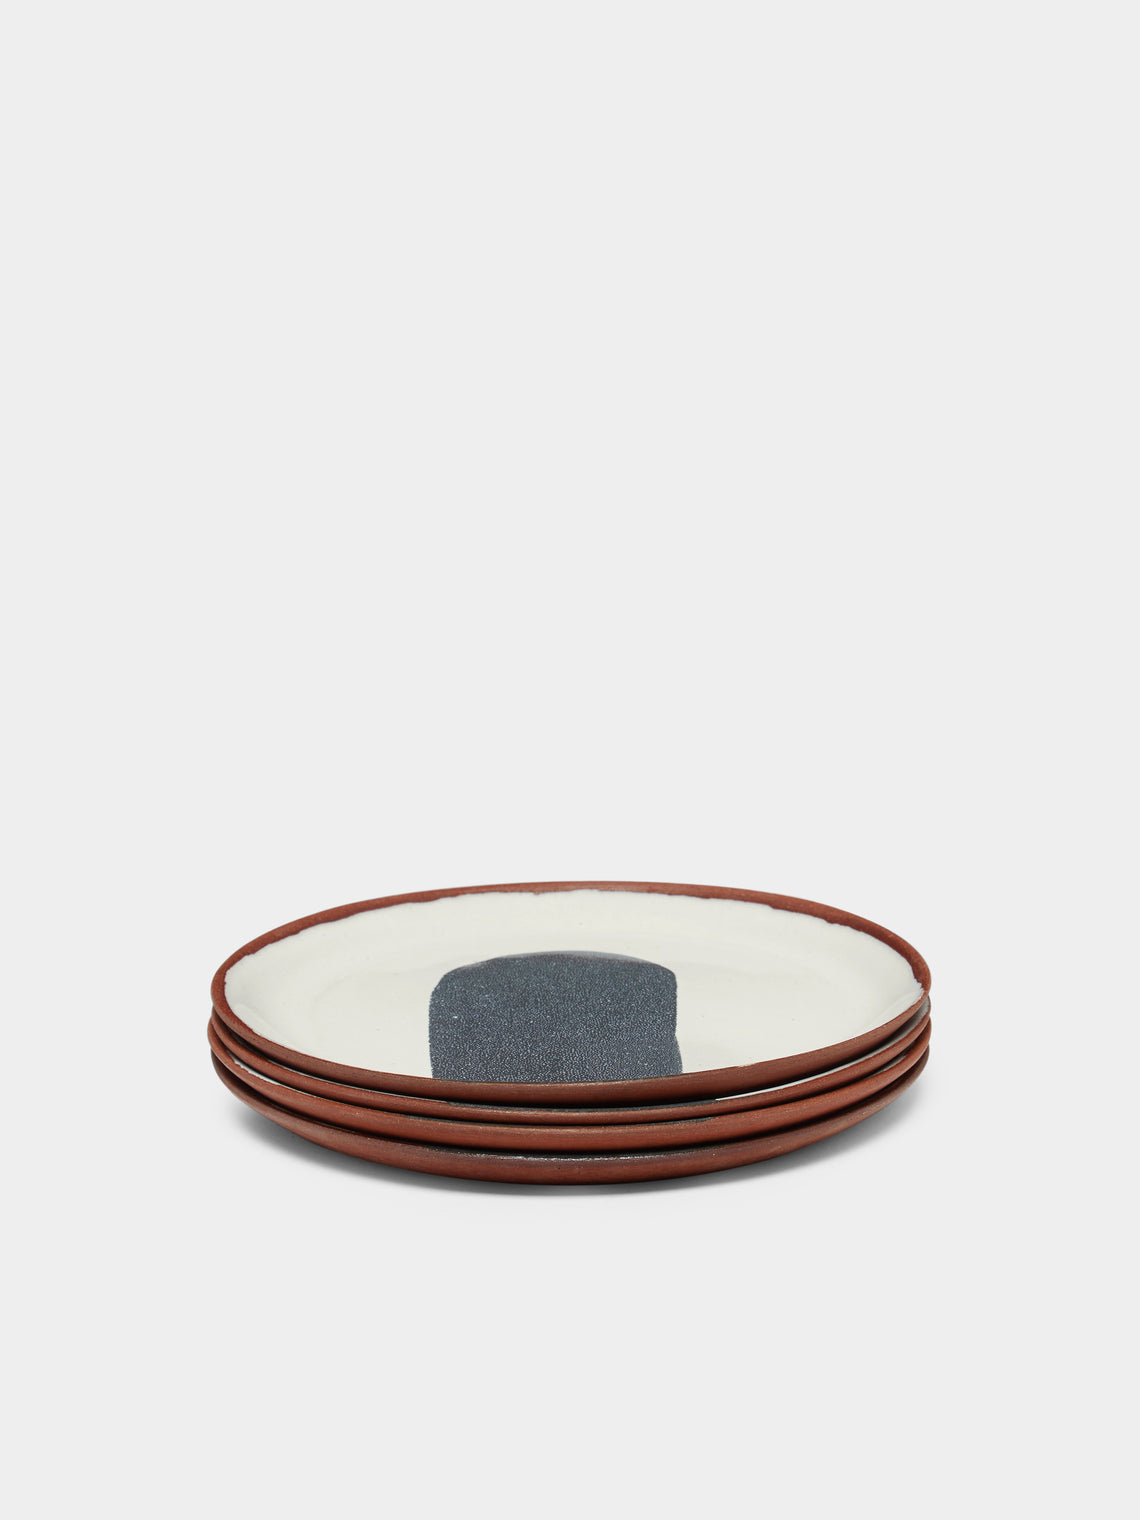 Silvia K Ceramics - Hand-Glazed Terracotta Small Plates (Set of 4) -  - ABASK